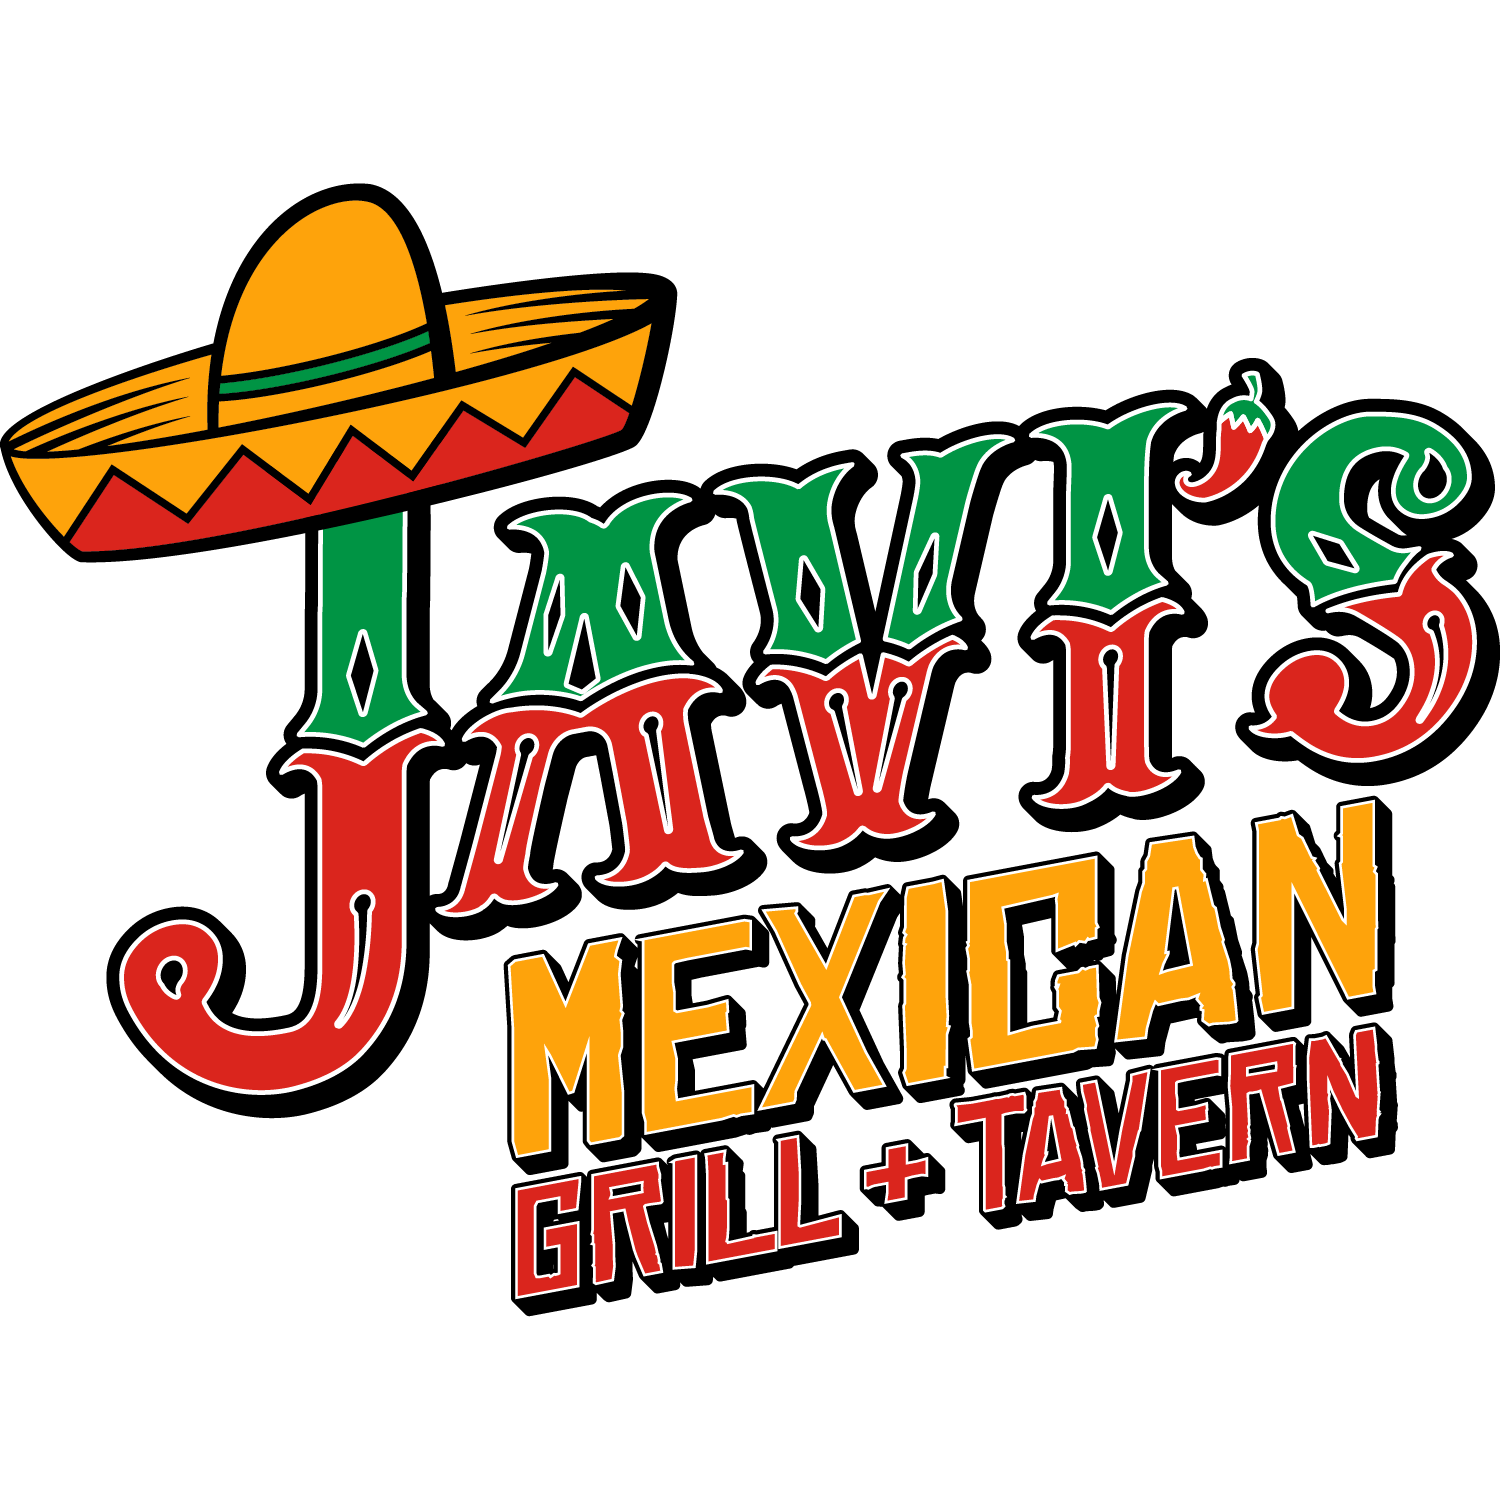 Javi's Mexican Grill & Tavern - Cleveland, GA 30528 - (706)865-0411 | ShowMeLocal.com